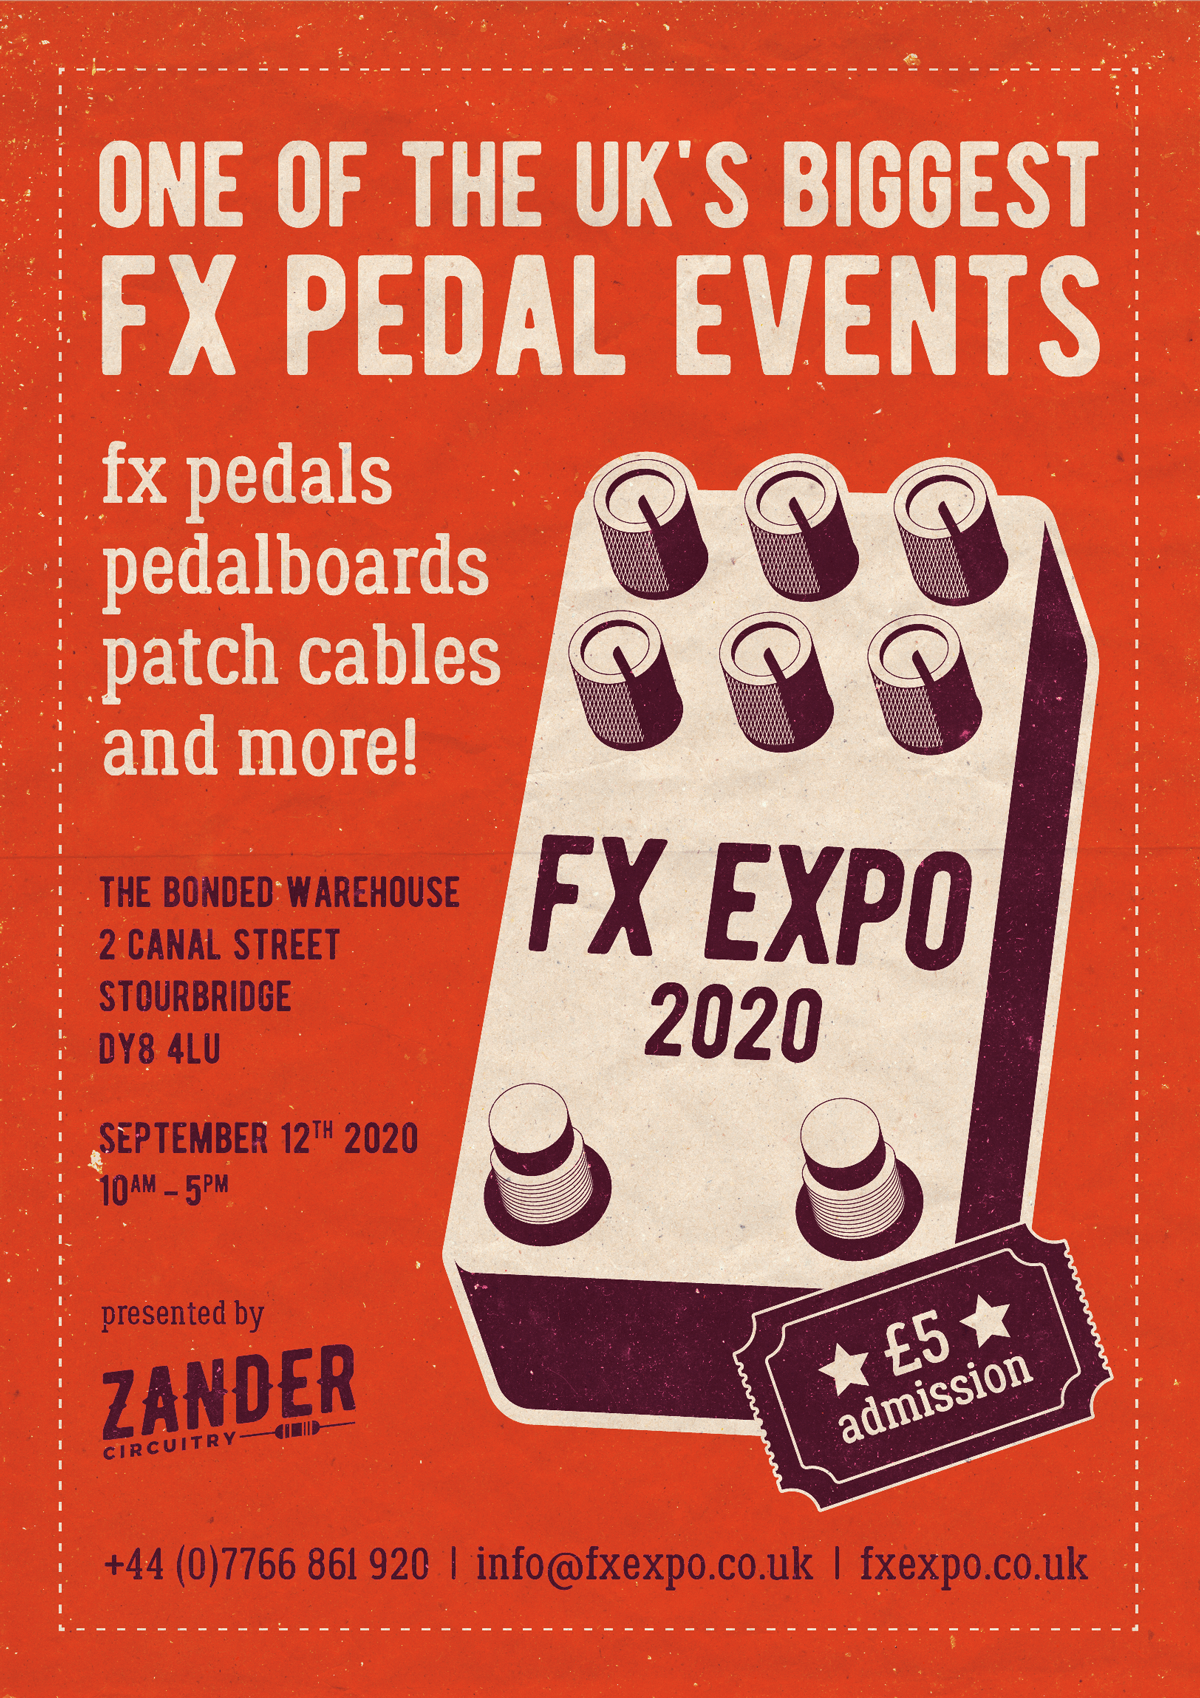 FXEXPO 2020 is coming to Stourbridge!